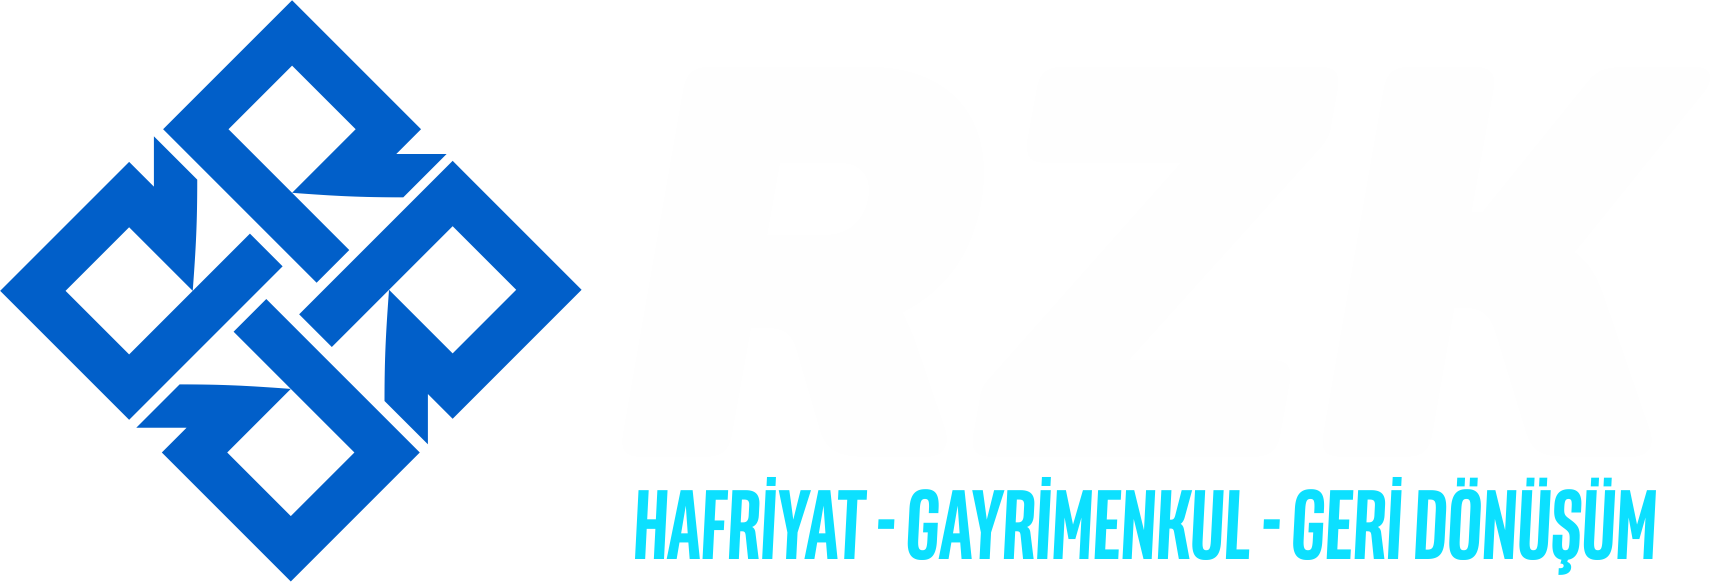 rzk-logo